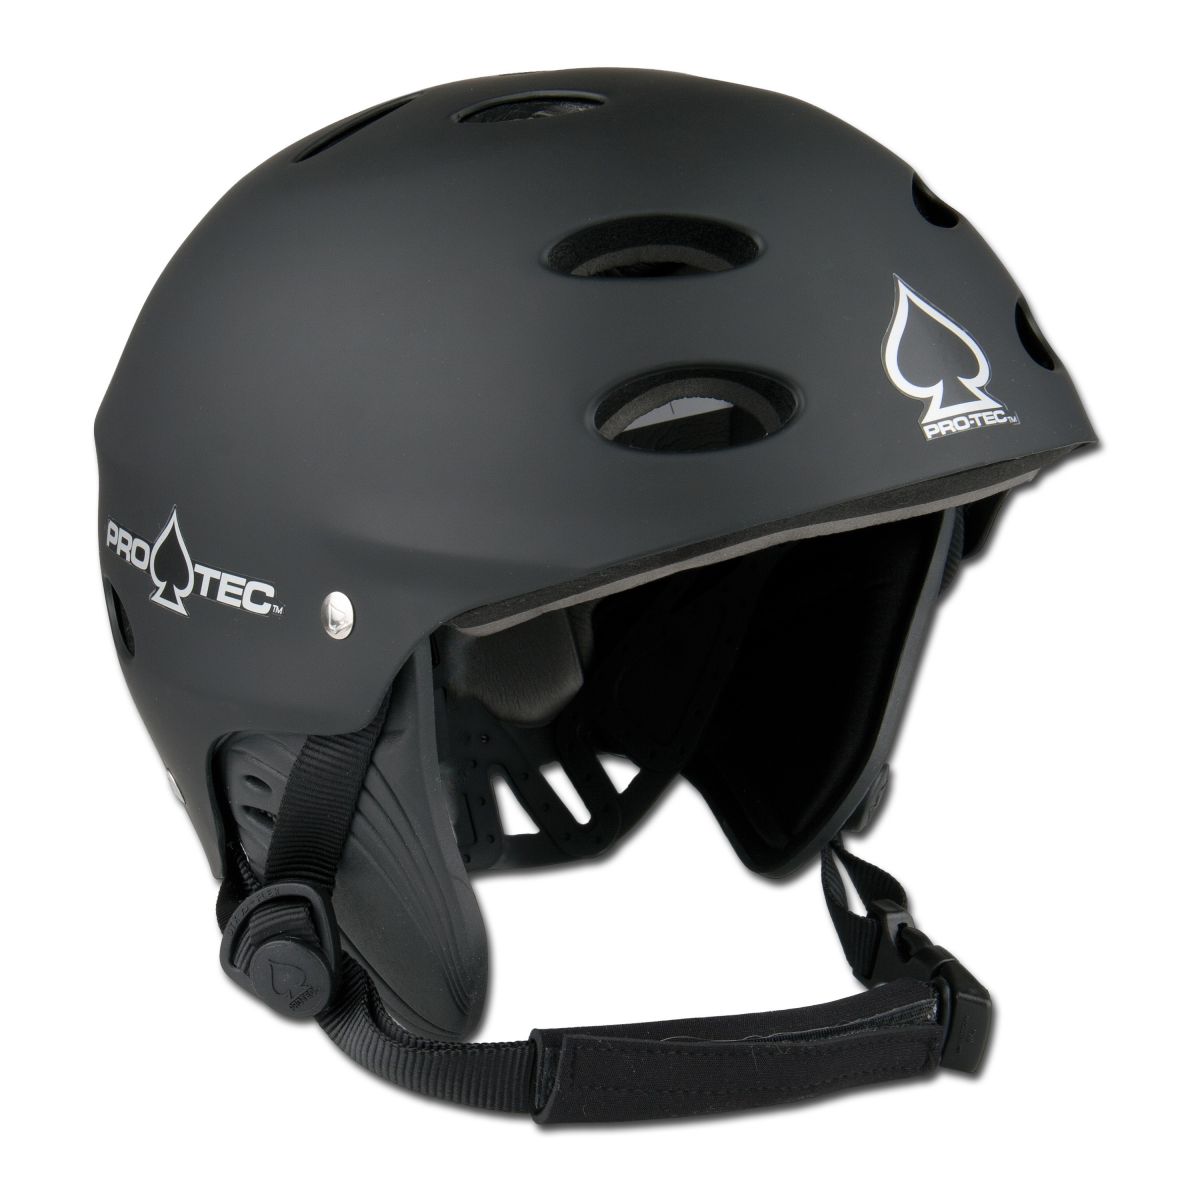 Helmet Protec Rodeo Pro black.